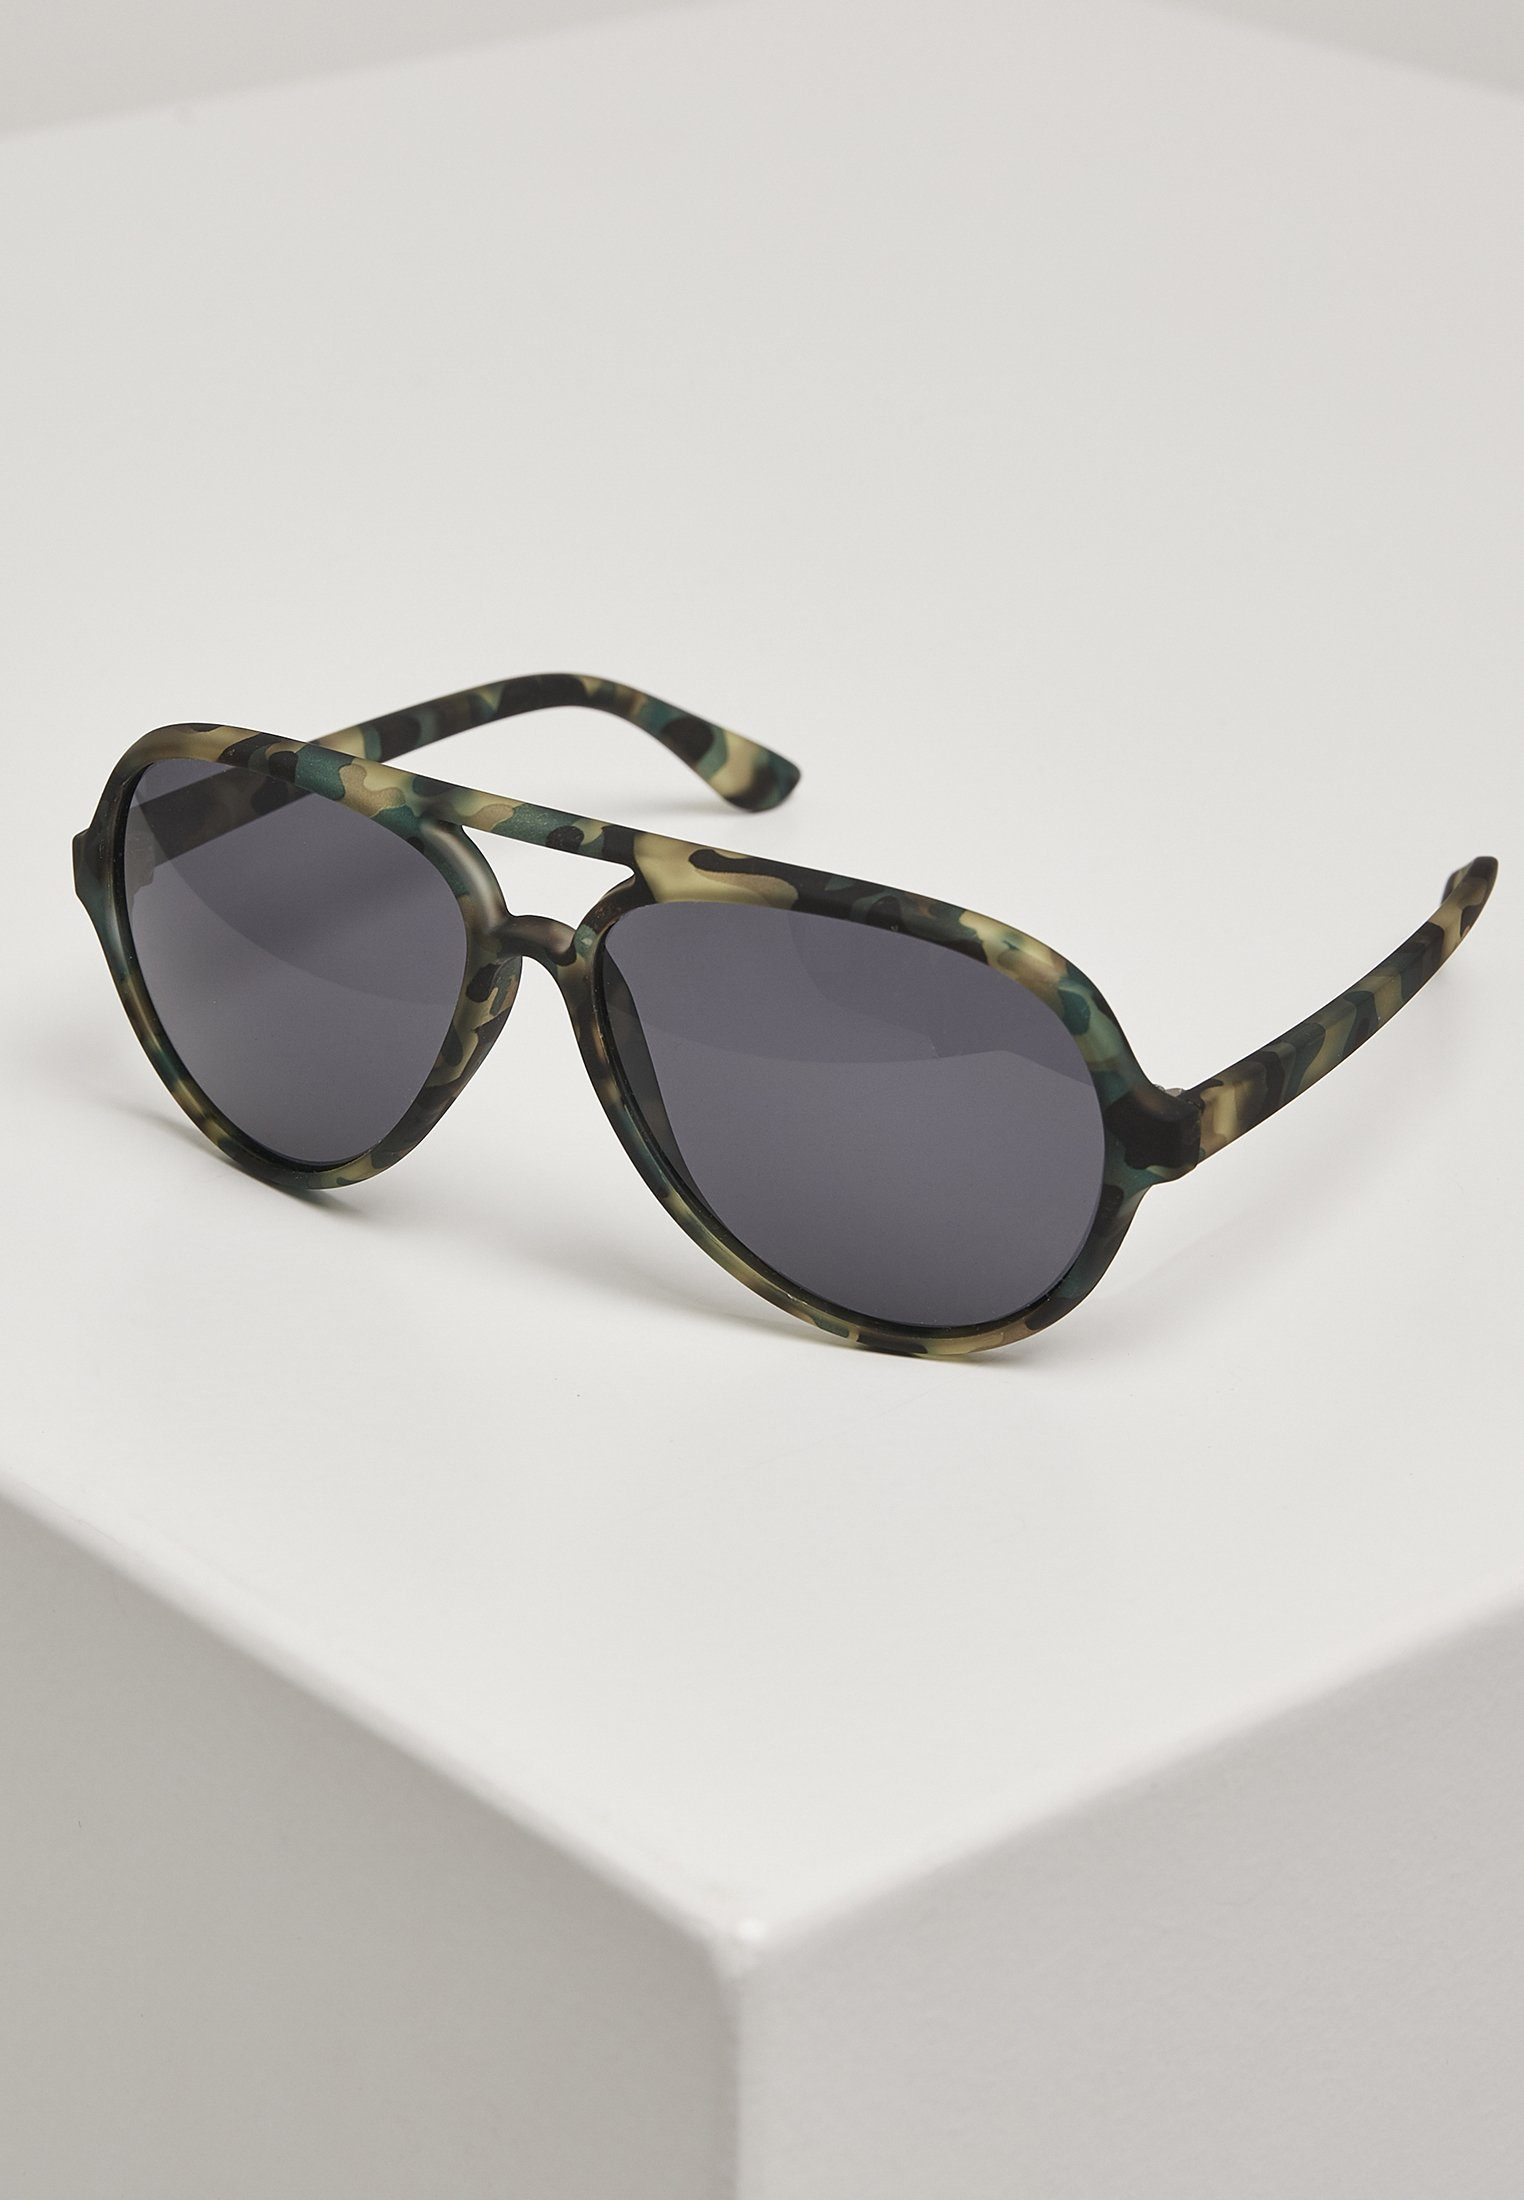 MSTRDS Sonnenbrille Accessoires camouflage Sunglasses March